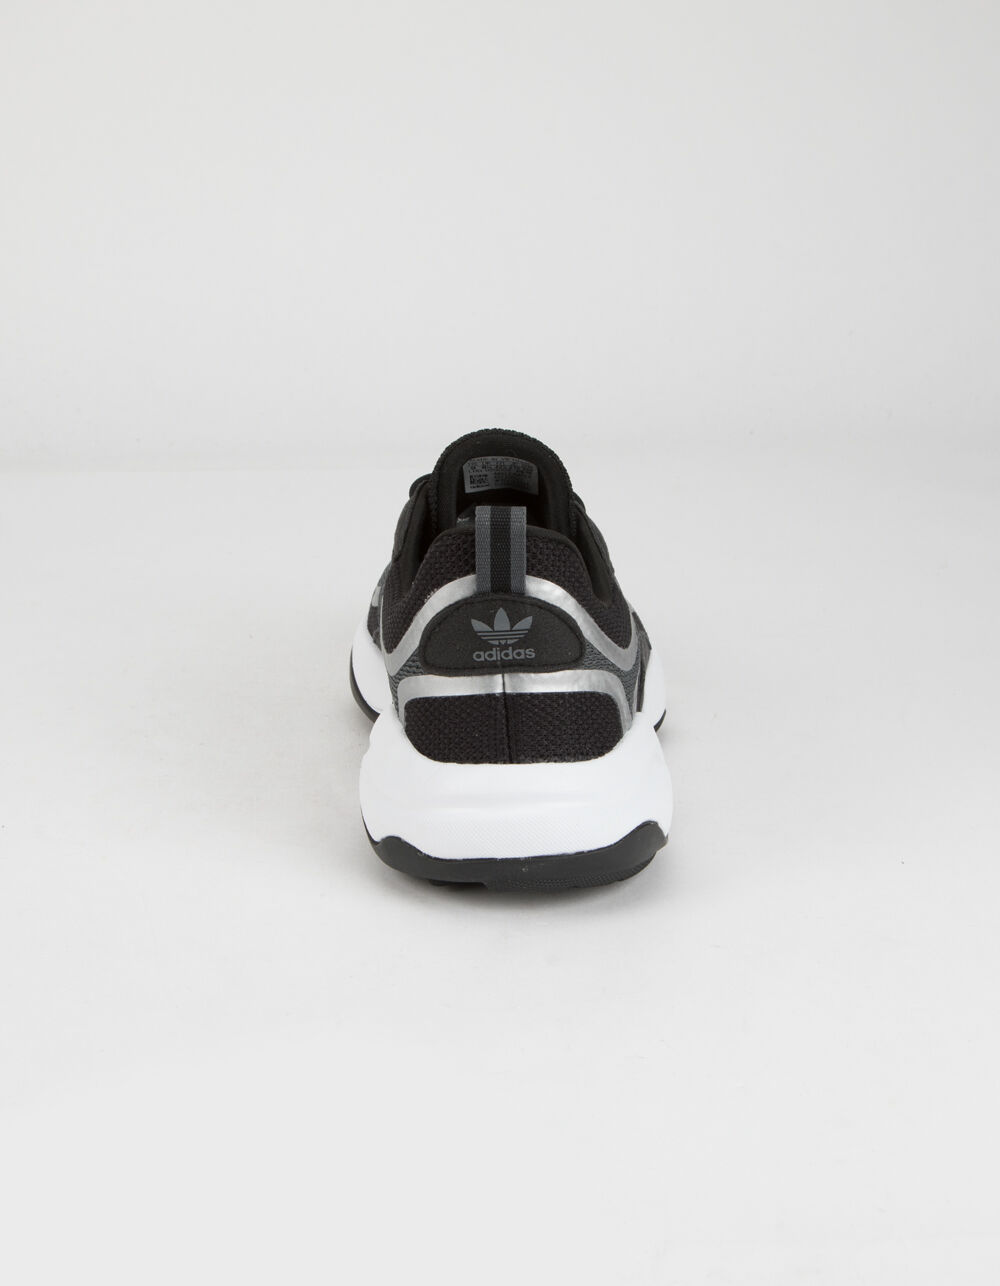 ADIDAS Haiwee Mens Shoes - BLACK/WHITE | Tillys